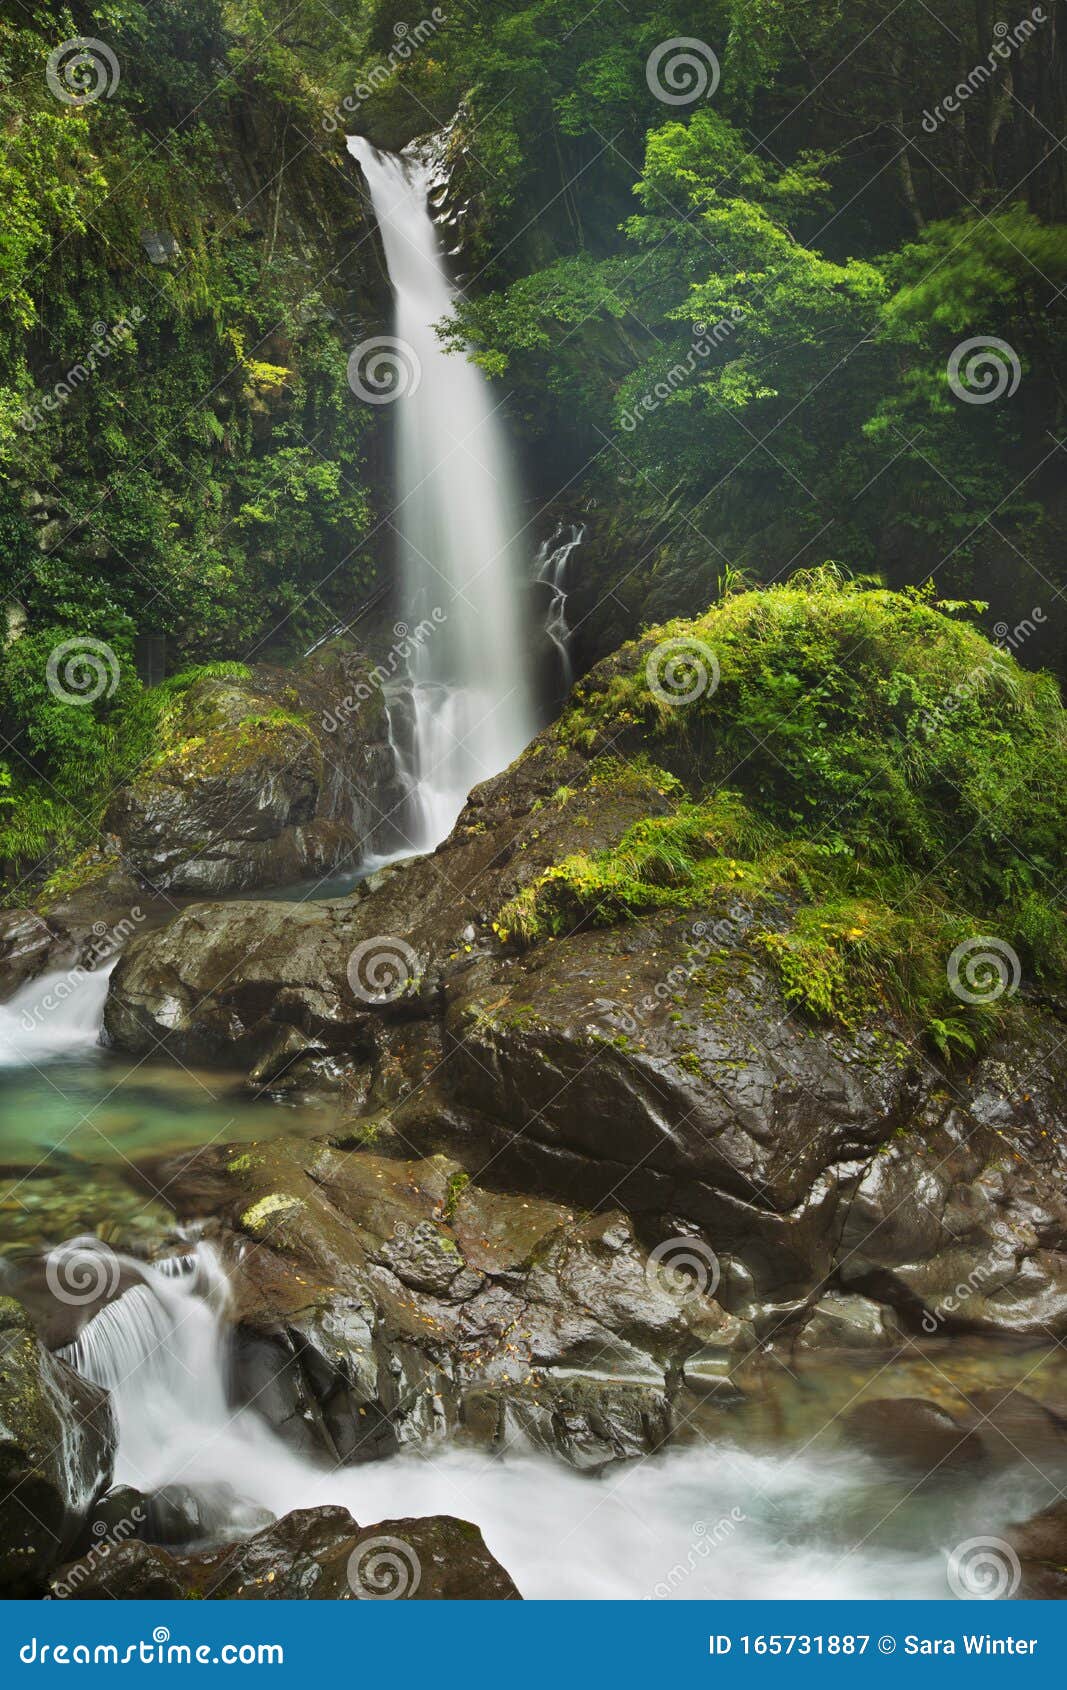 kawazu waterfall trail, izu peninsula, japan